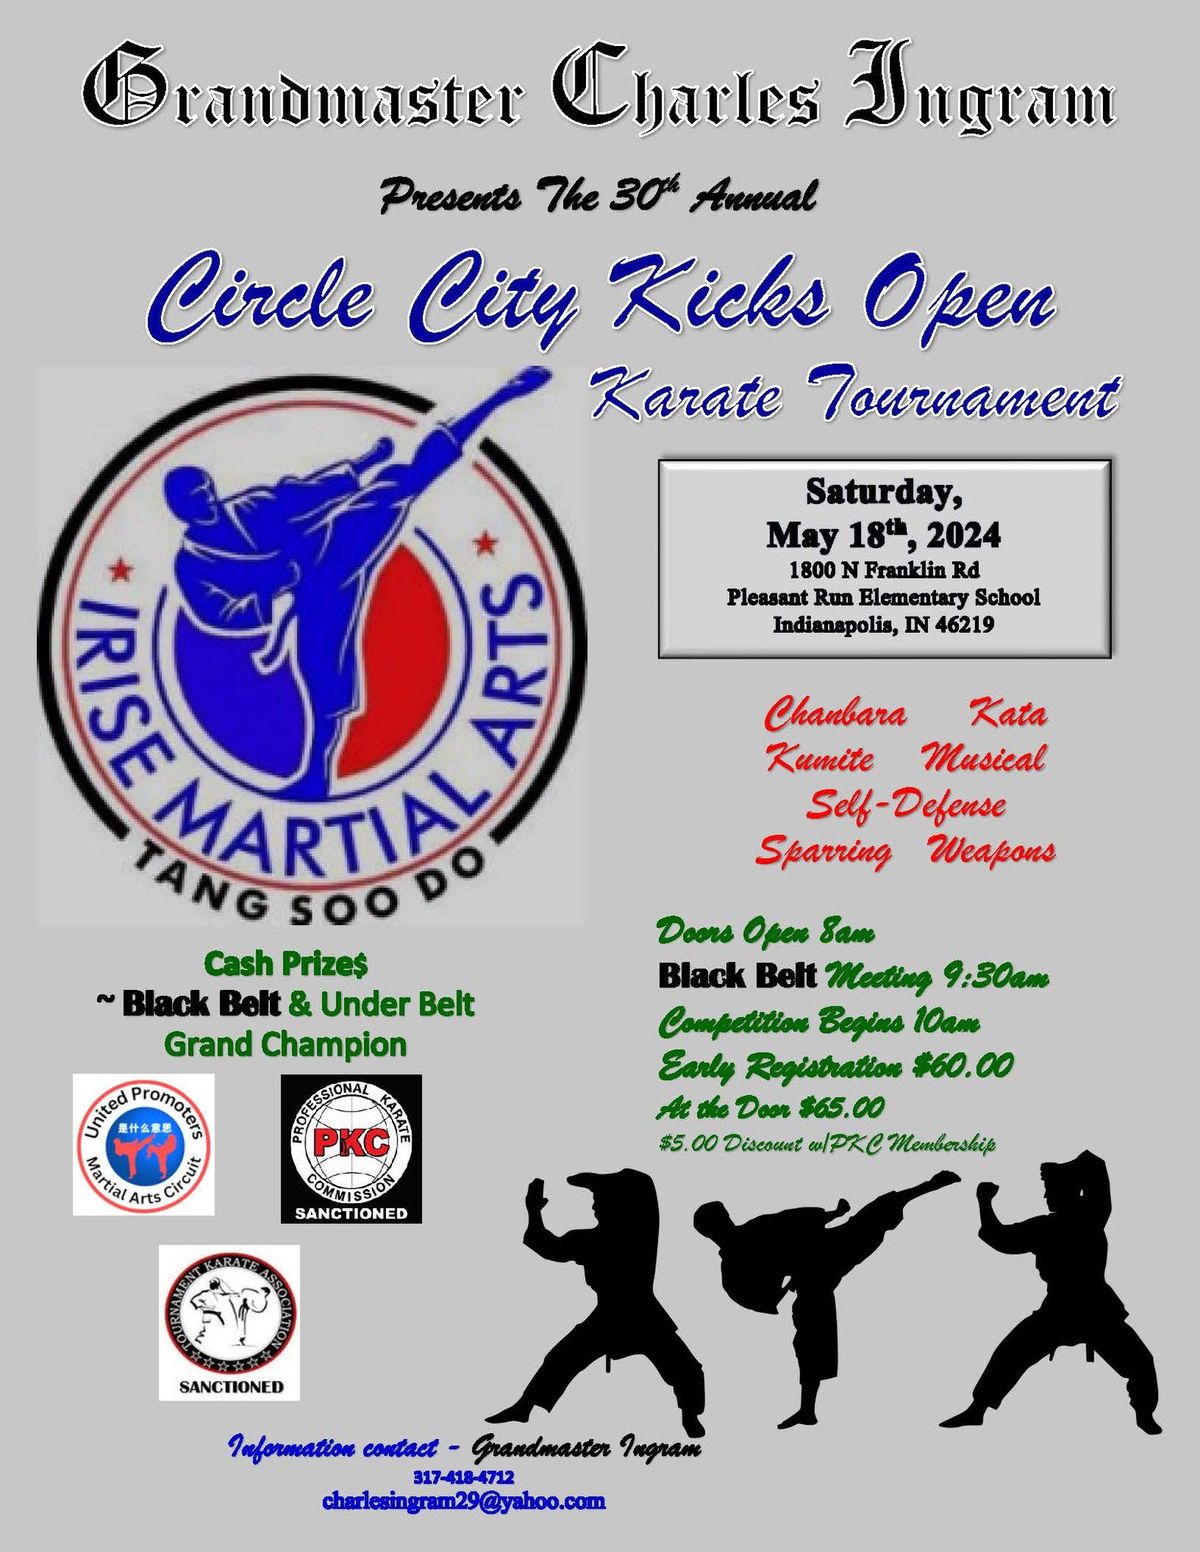 The 30th Annual Circle City Kicks Open Karate Tournament